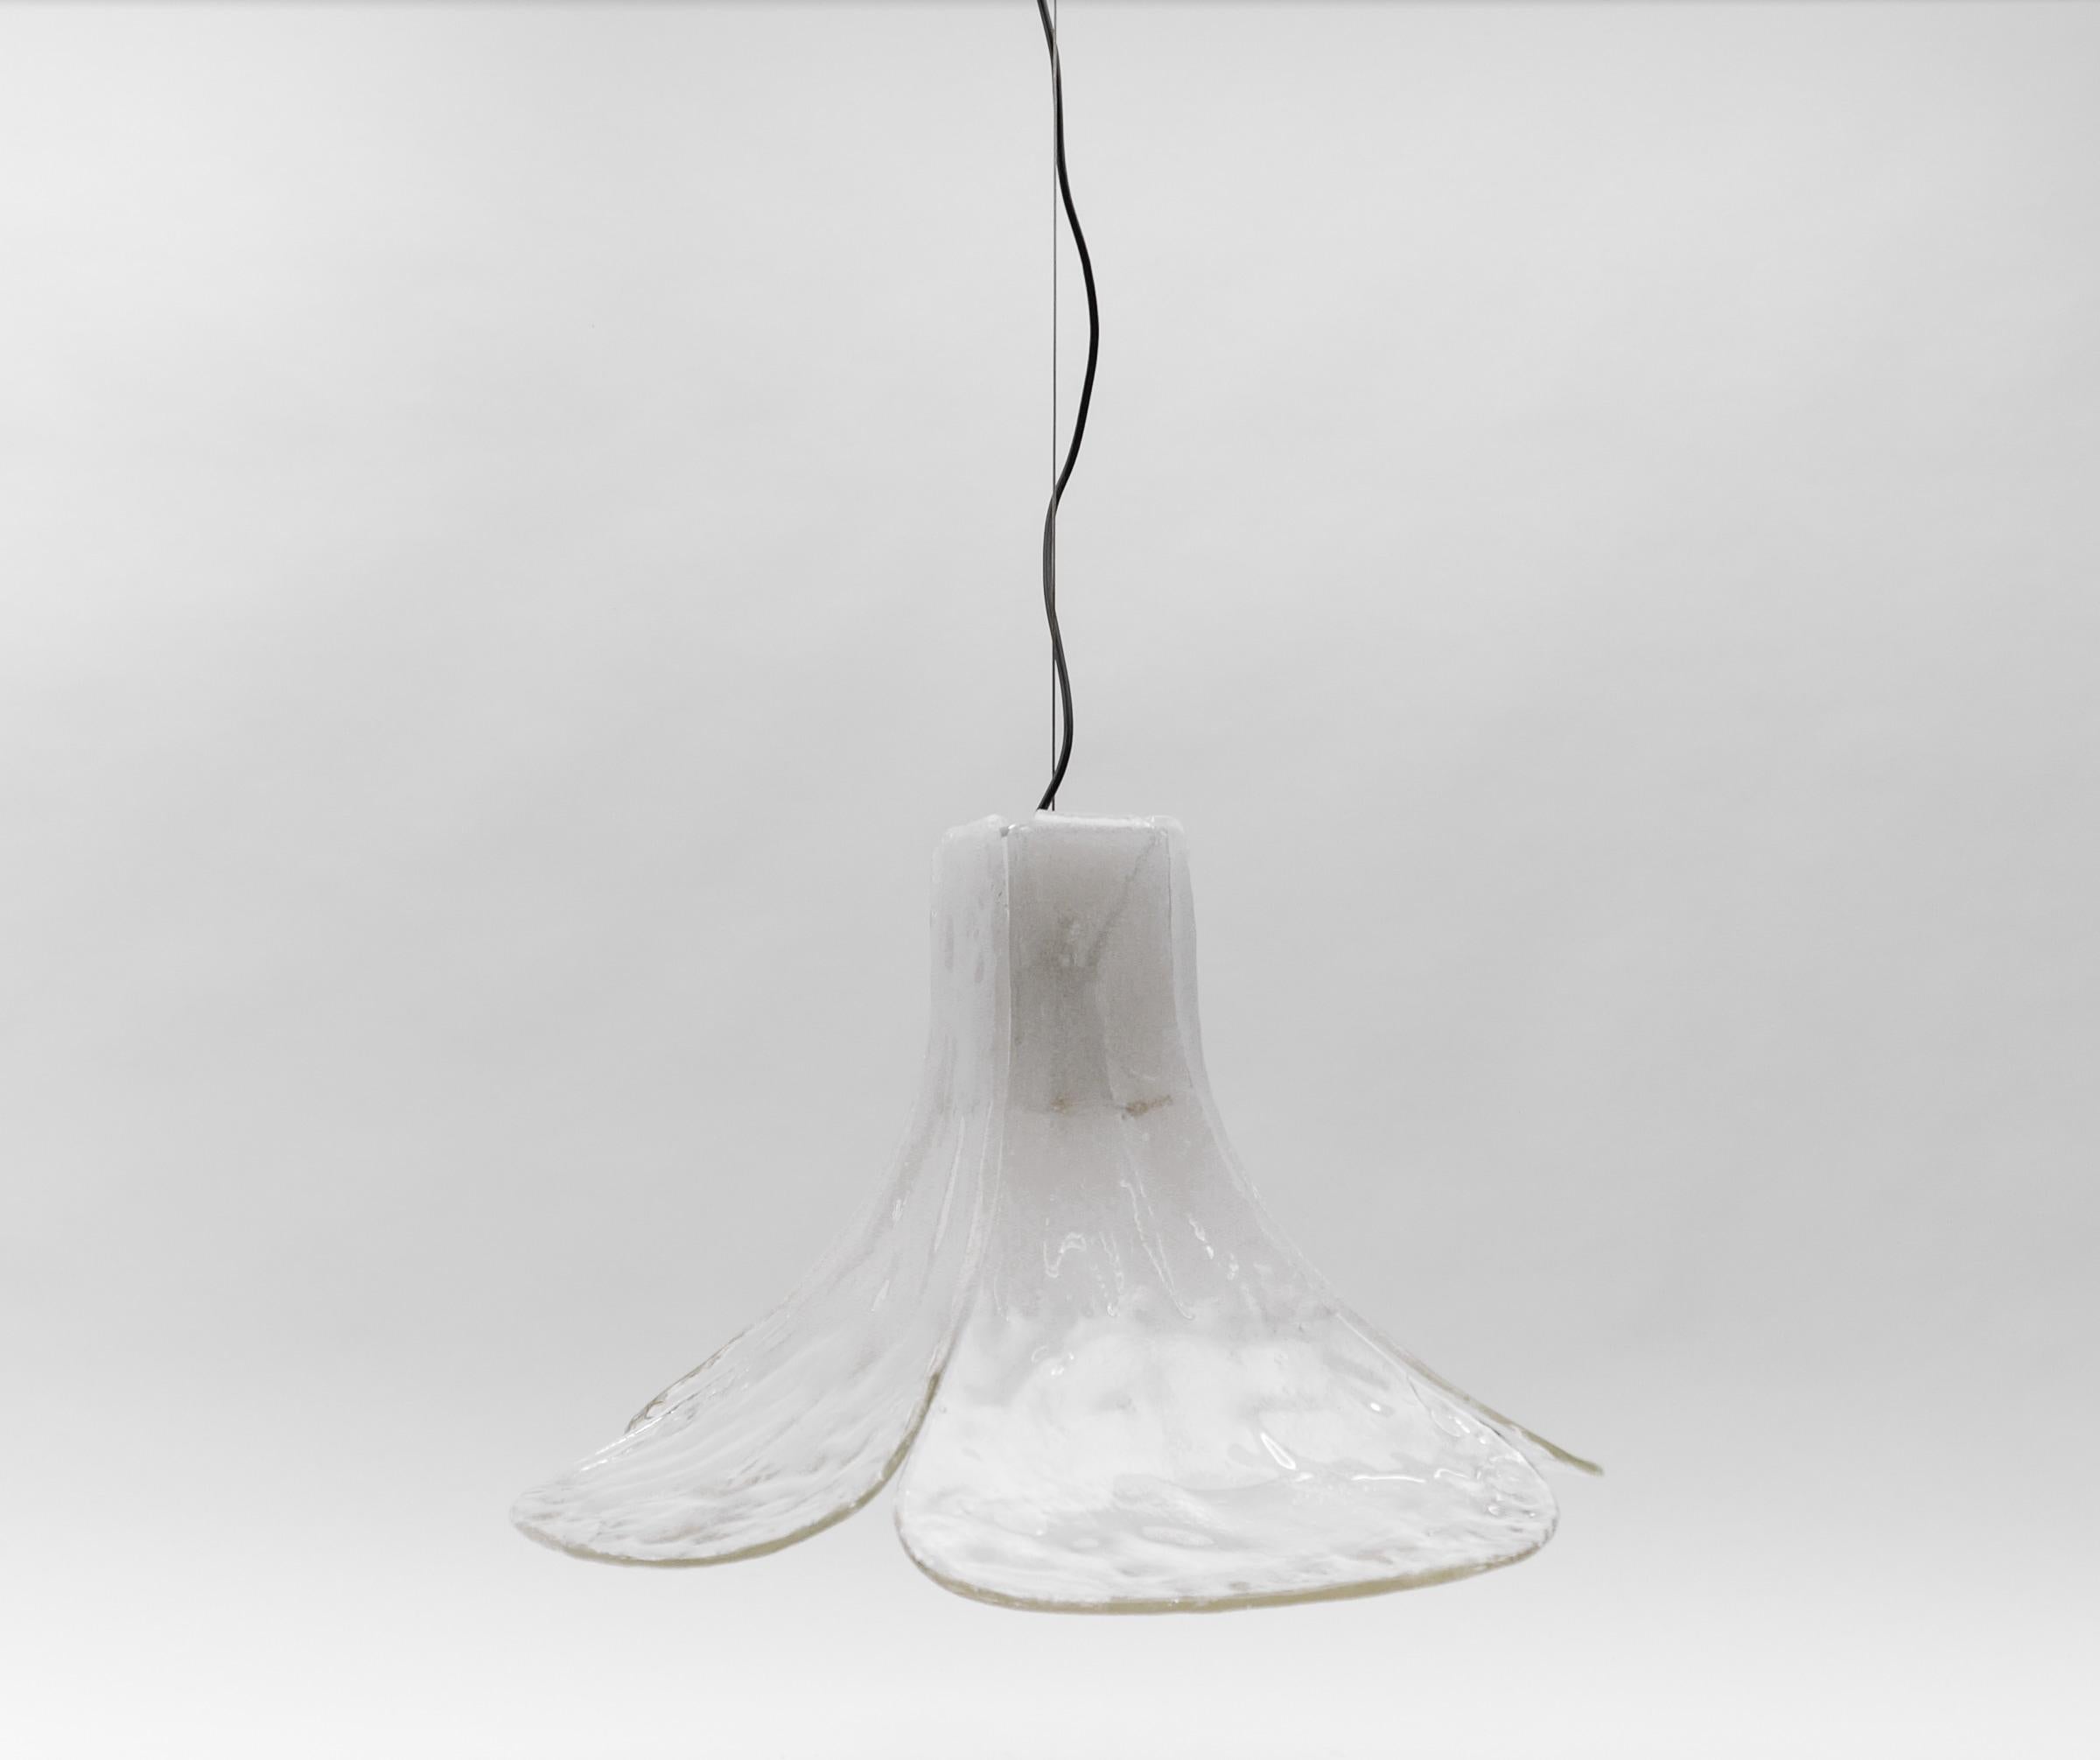 White Mazzega Pendant Lamp by Carlo Nason for J.T. Kalmar in Murano Glass, 1970s For Sale 1